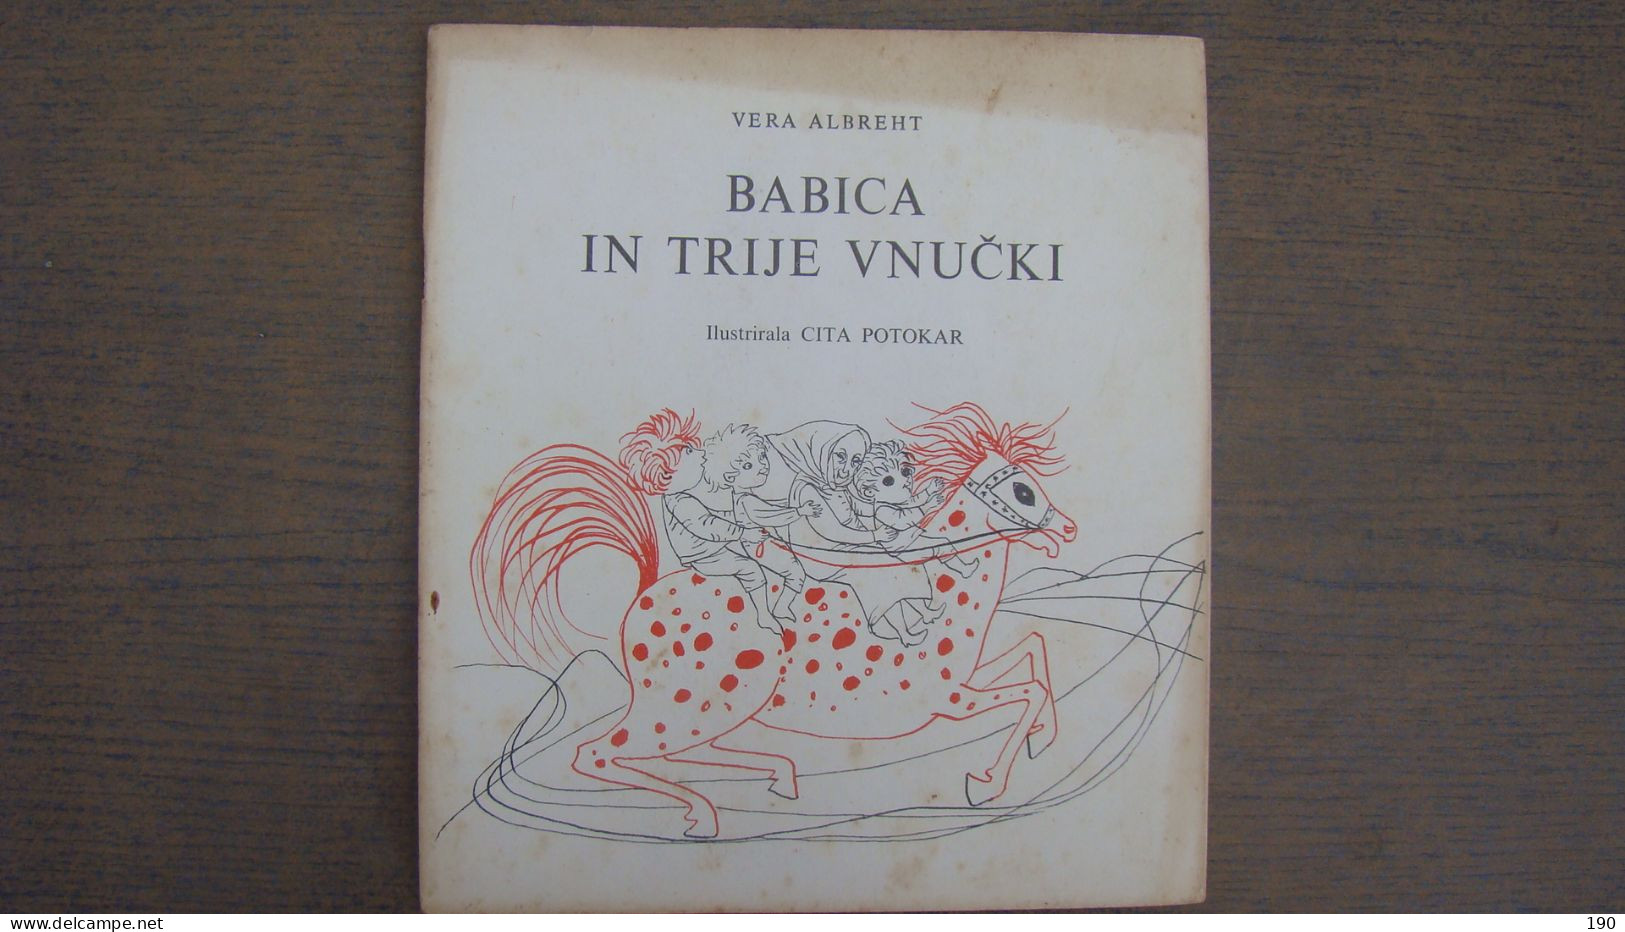 Babica In Trije Vnucki (Vera Albreht),Illustrated: Cita Potokar - Idiomas Eslavos